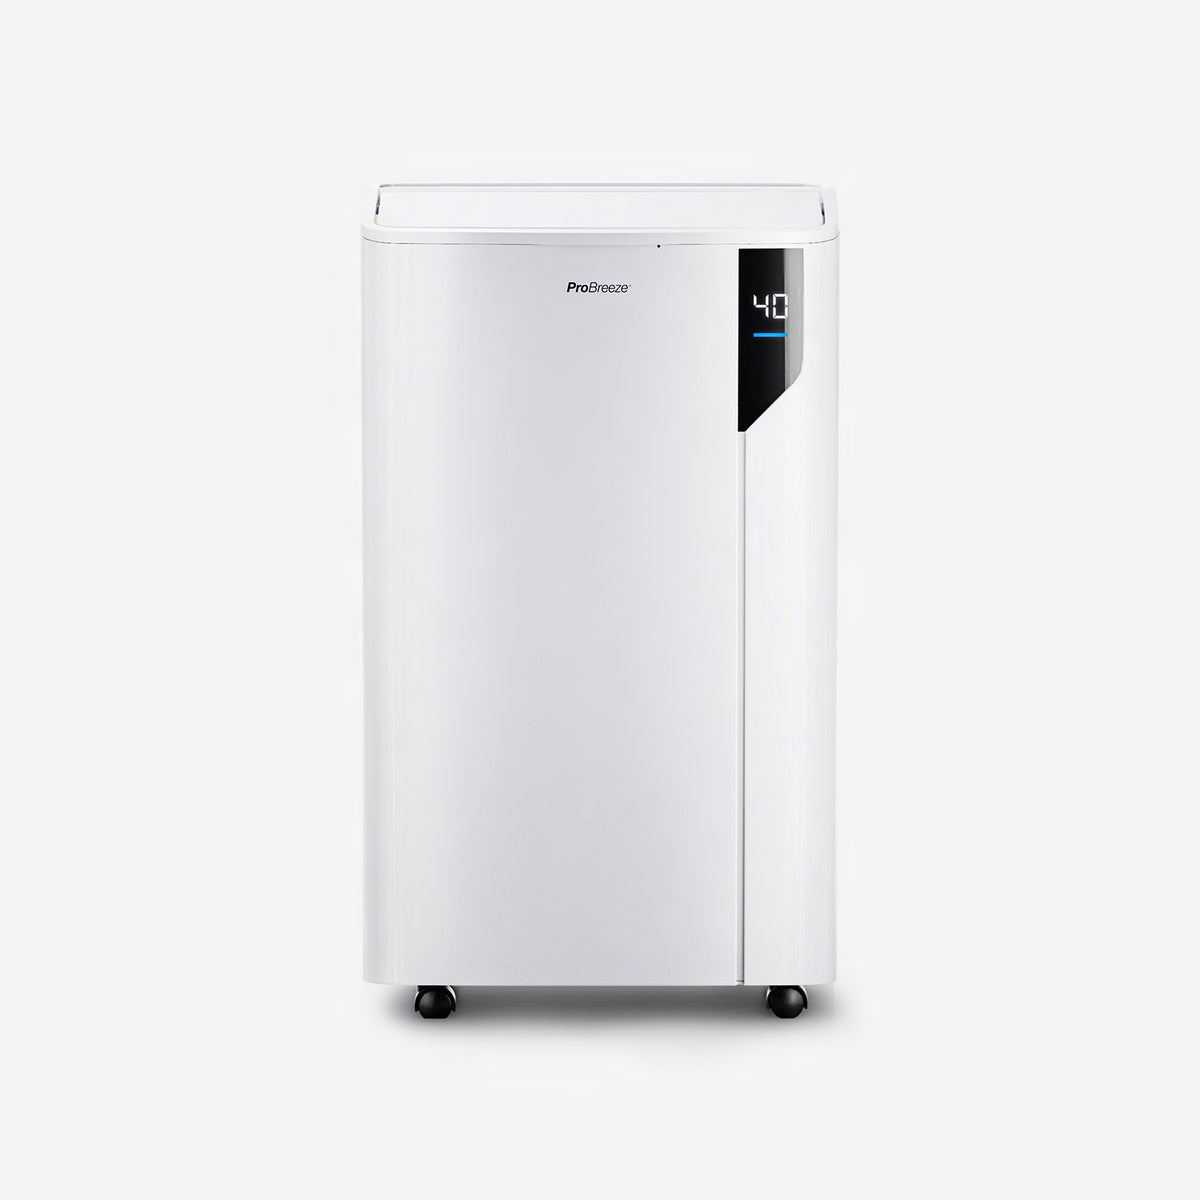 20L Premium Dehumidifier with Laundry Mode